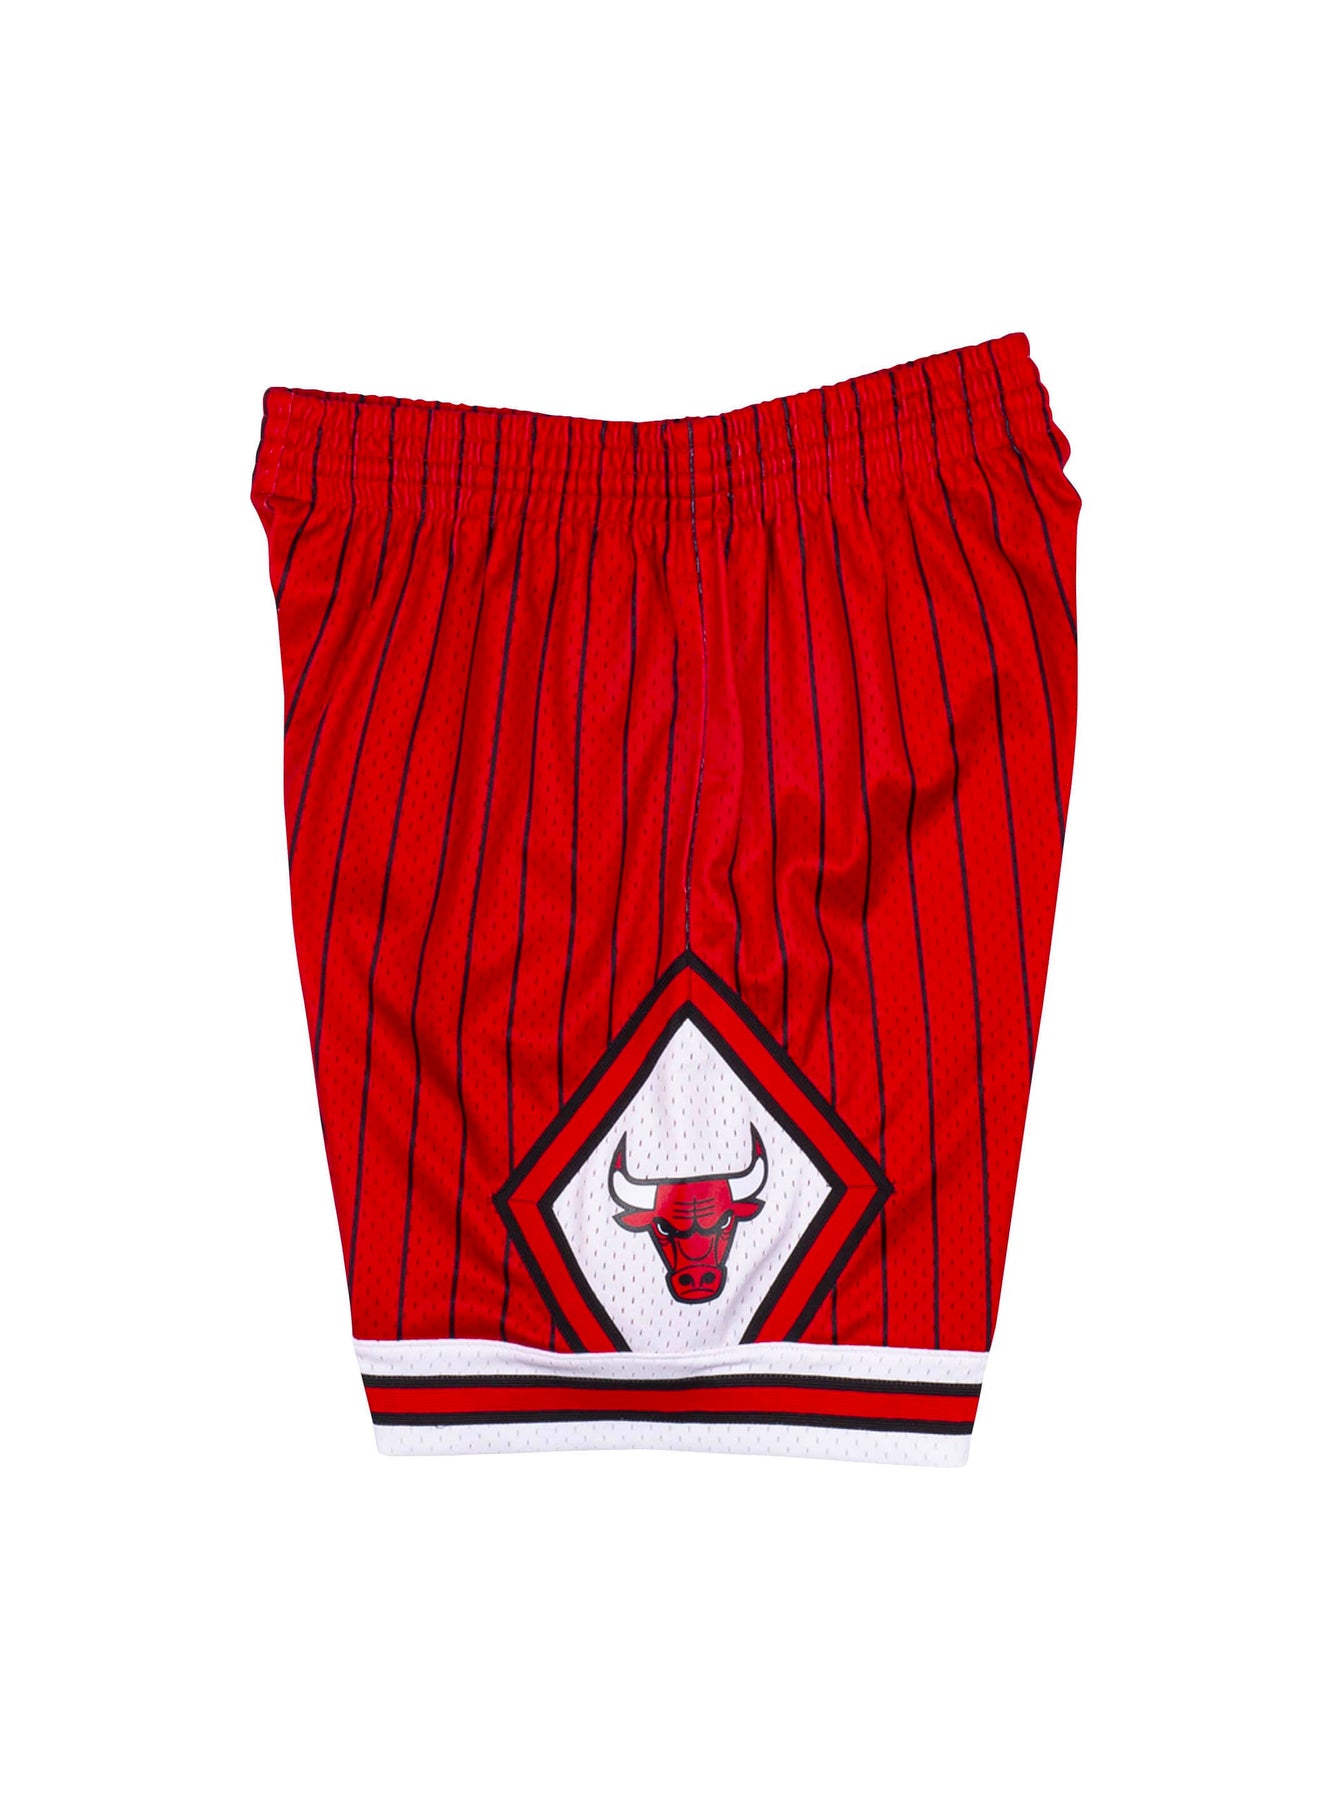 Chicago Bulls Hardwood Classics Alternate Swingman Shorts By